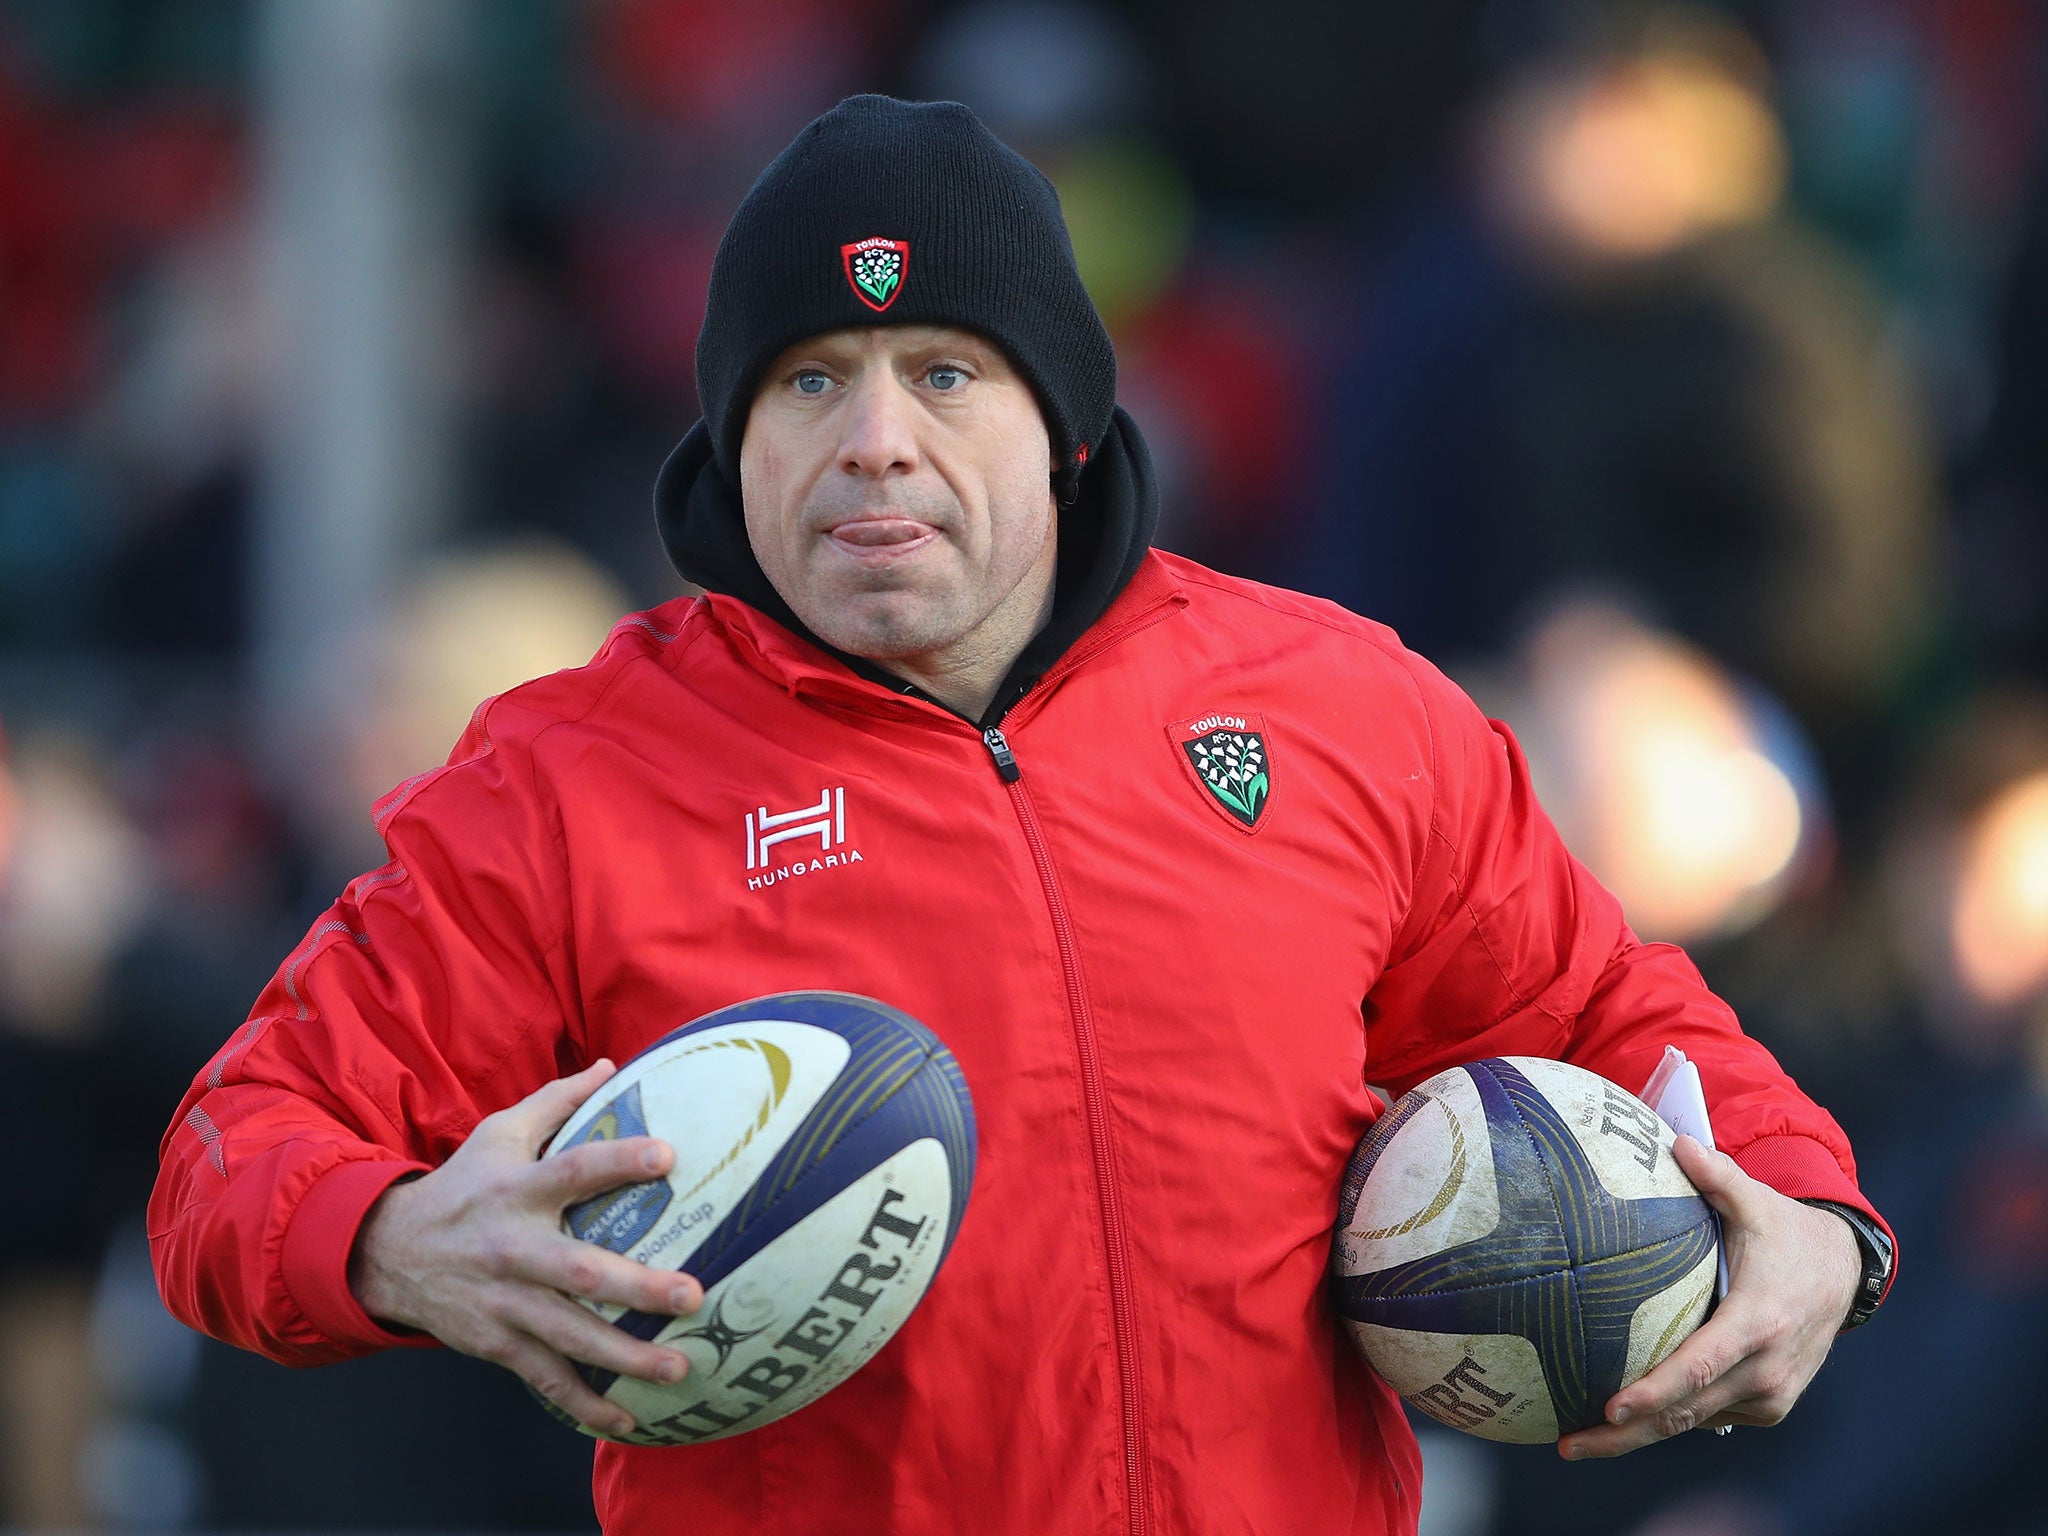 Richard Cockerill will become head coach at Edinburgh Rugby from next season